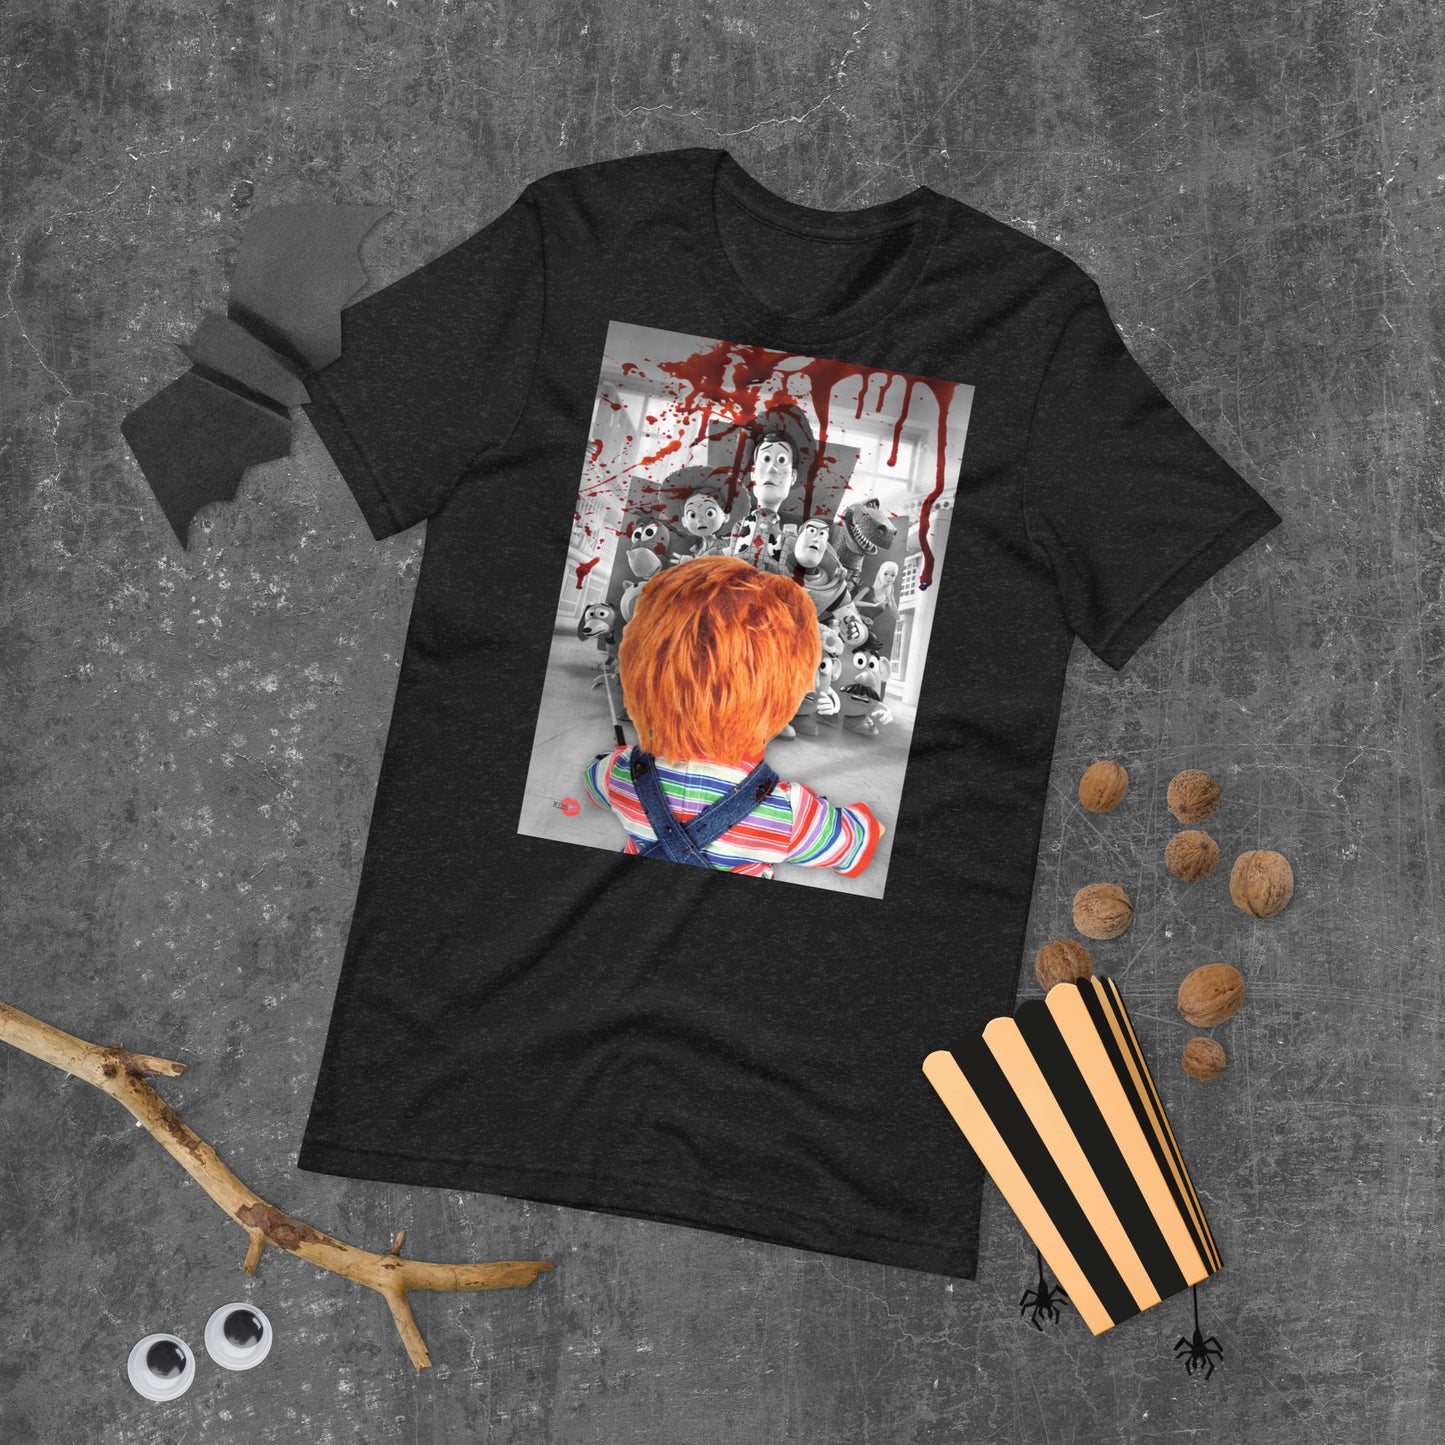 Toys Vs Chucky KiSS Unisex t-shirt - Toy Story Inspired Horror Halloween Edit